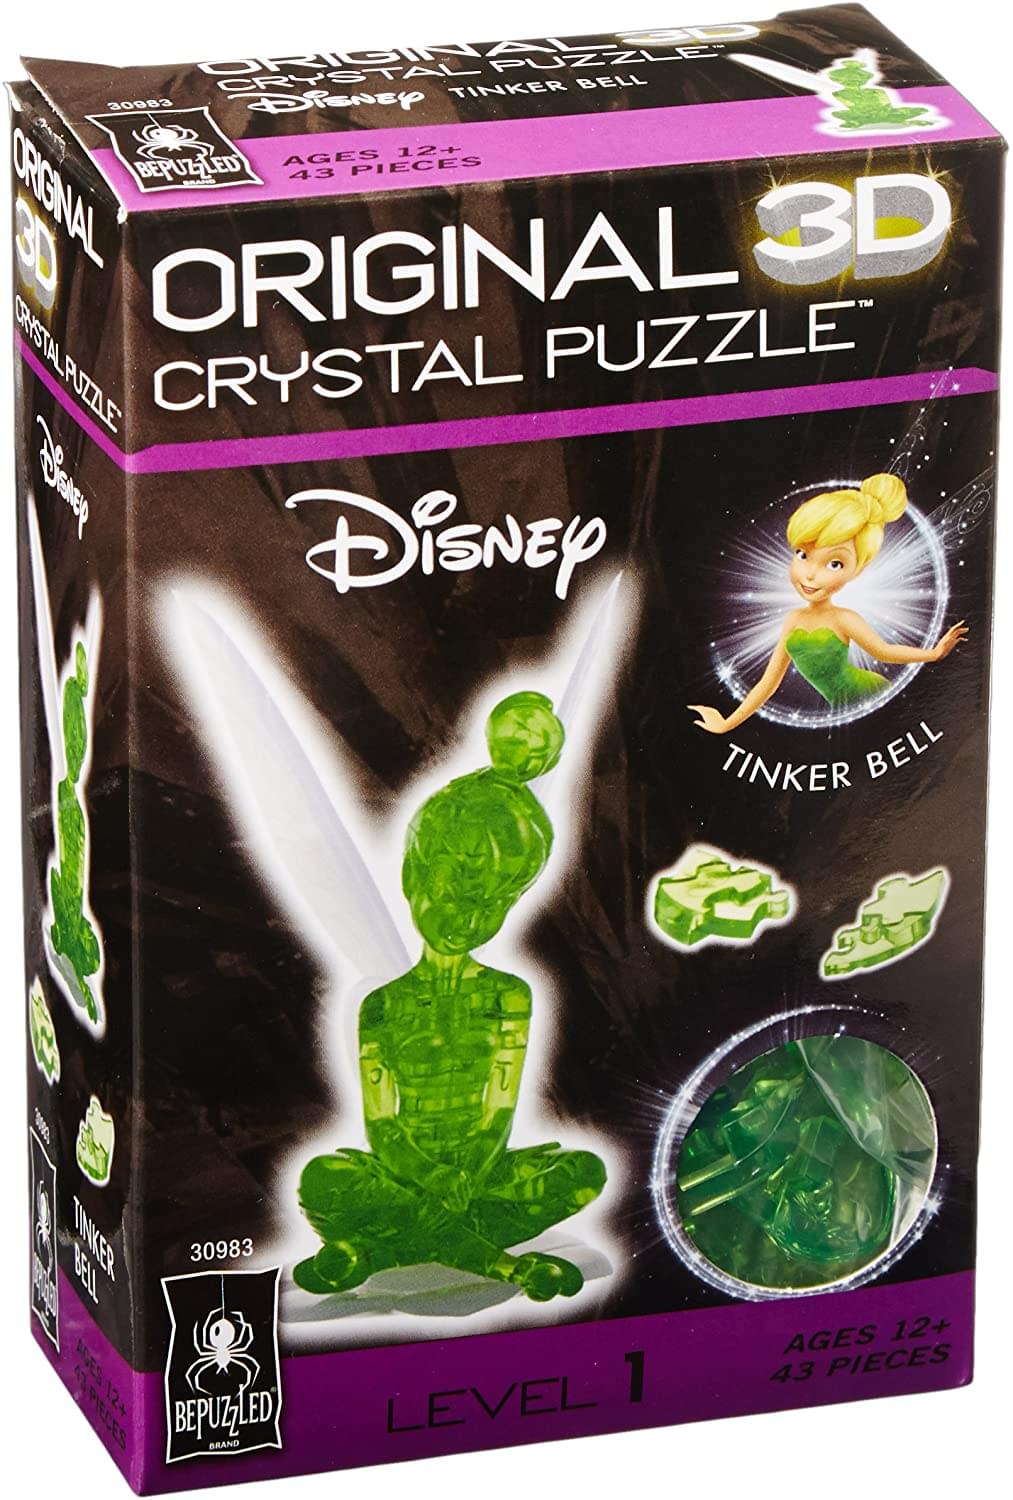 Disney Tinker Bell 43 Piece 3D Crystal Jigsaw Puzzle